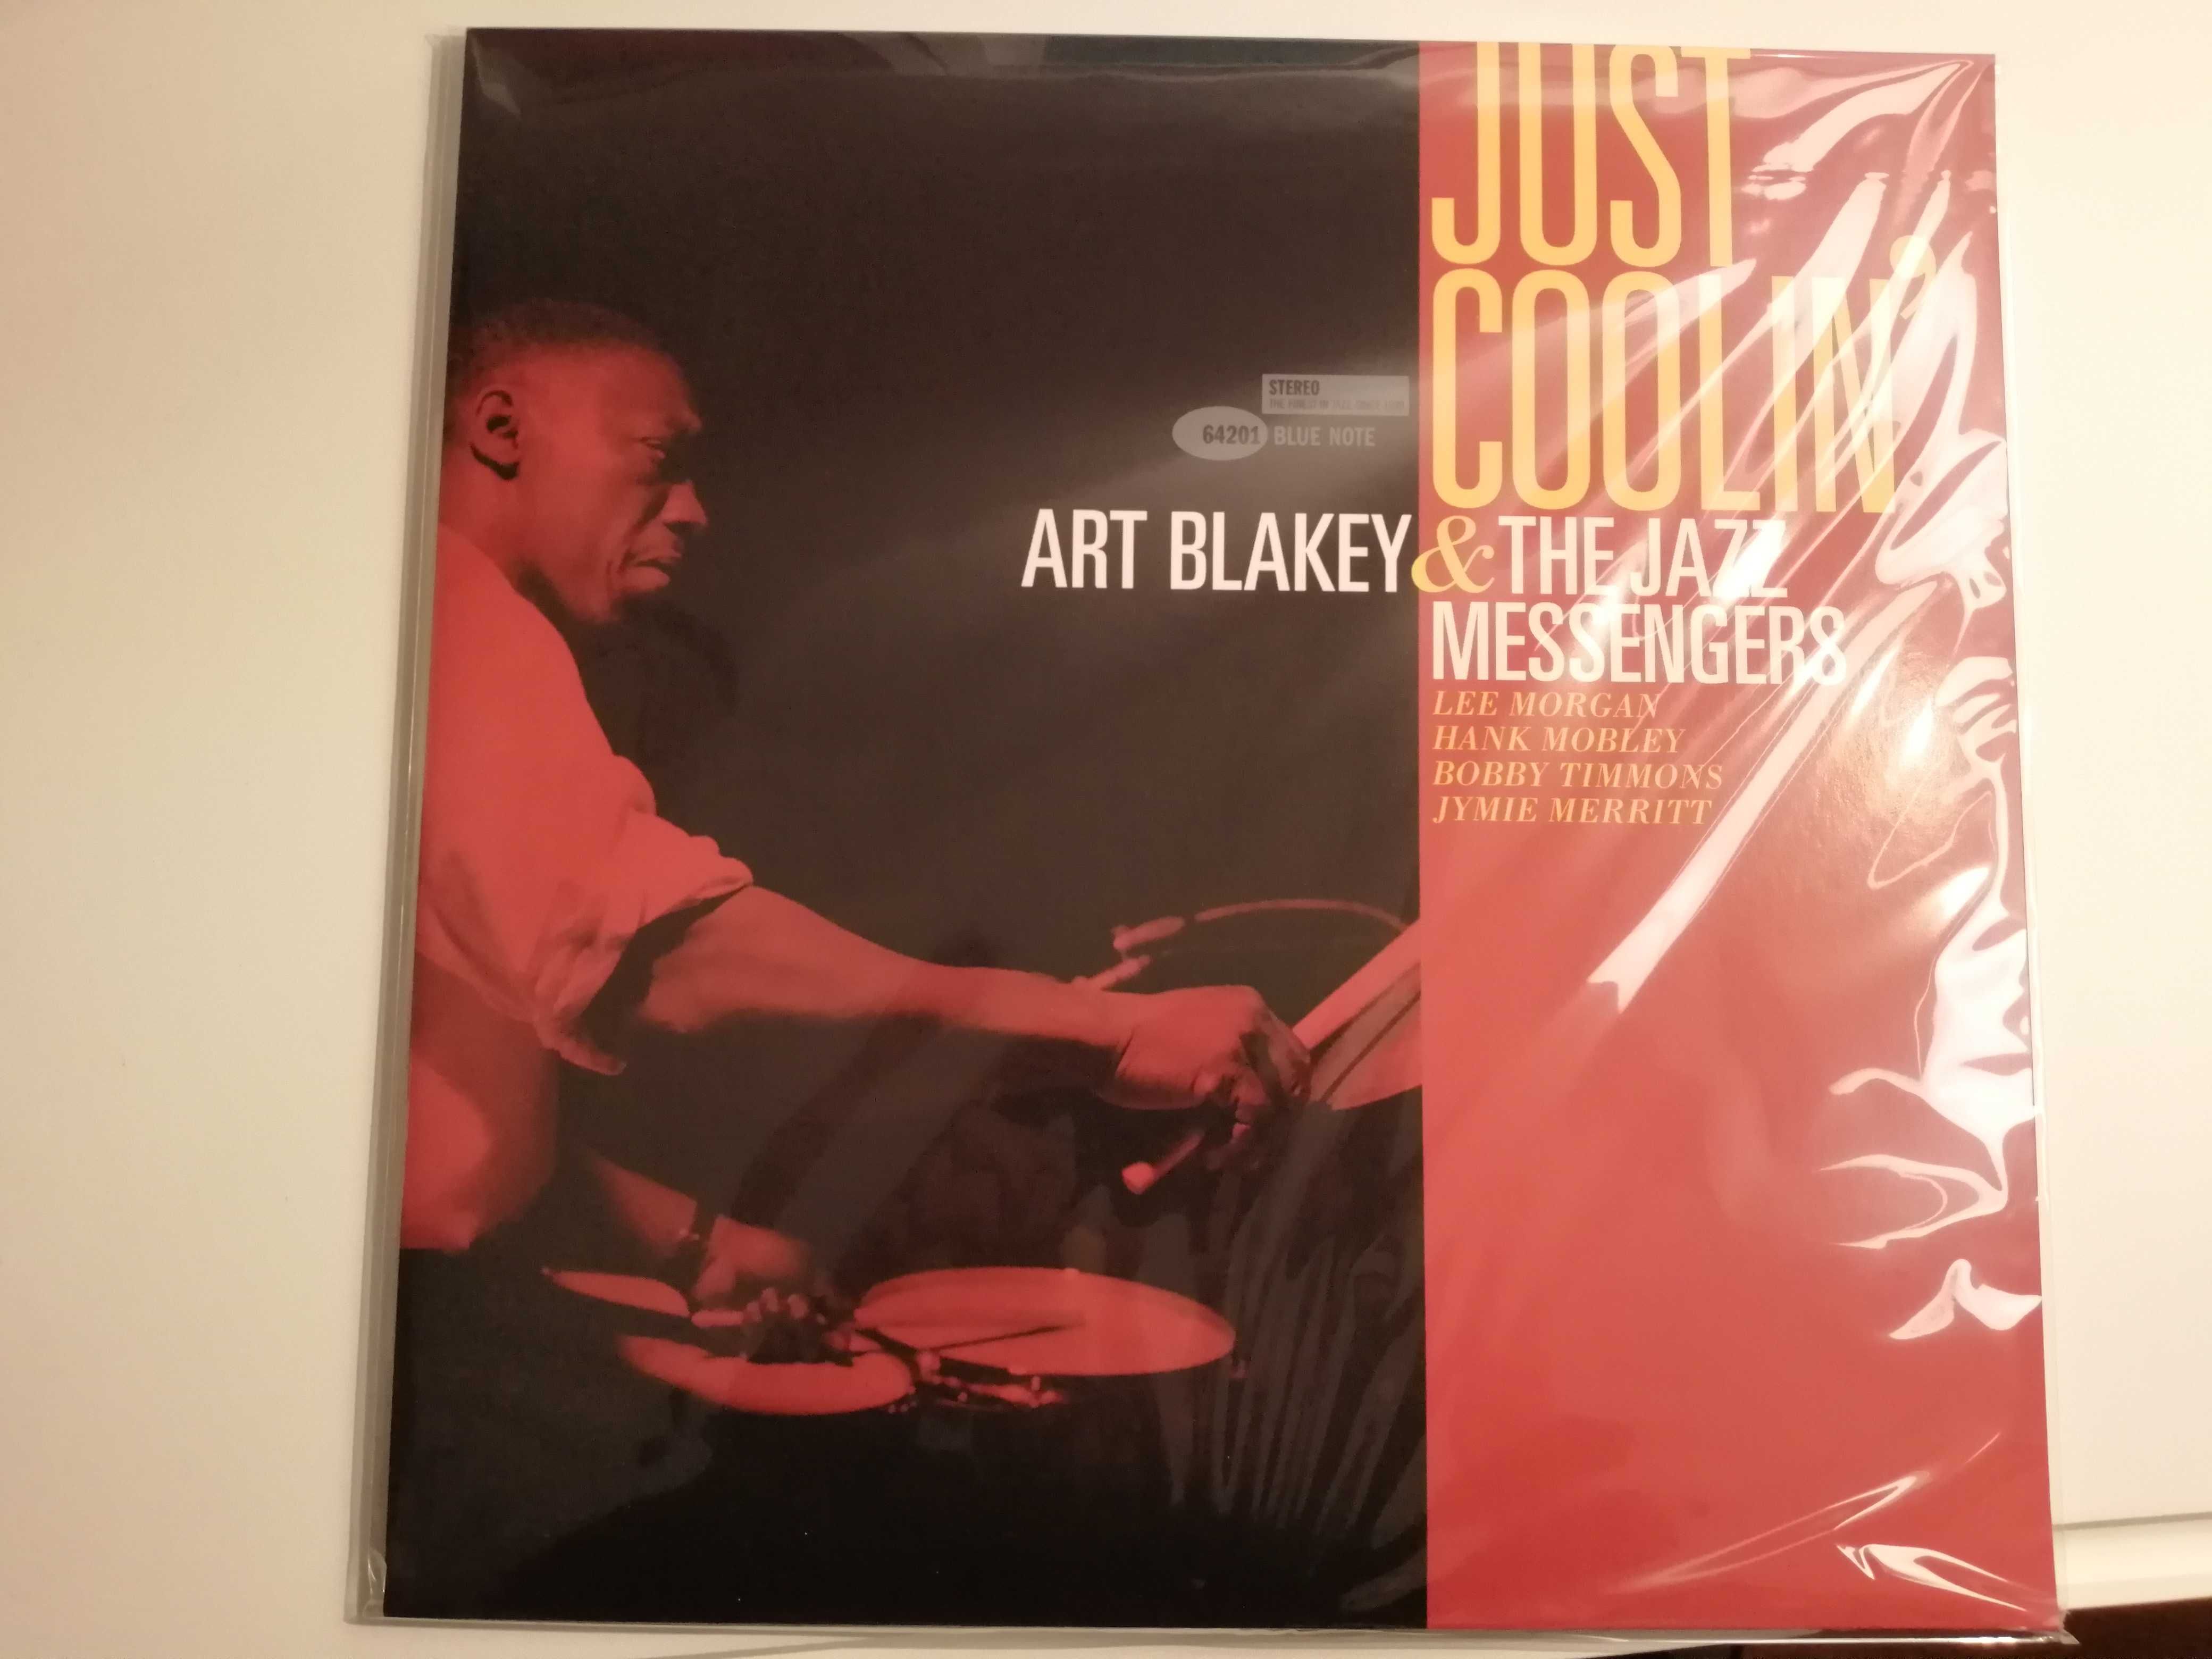 Art Blakey & The Jazz Messengers – Just Coolin' Vinyl